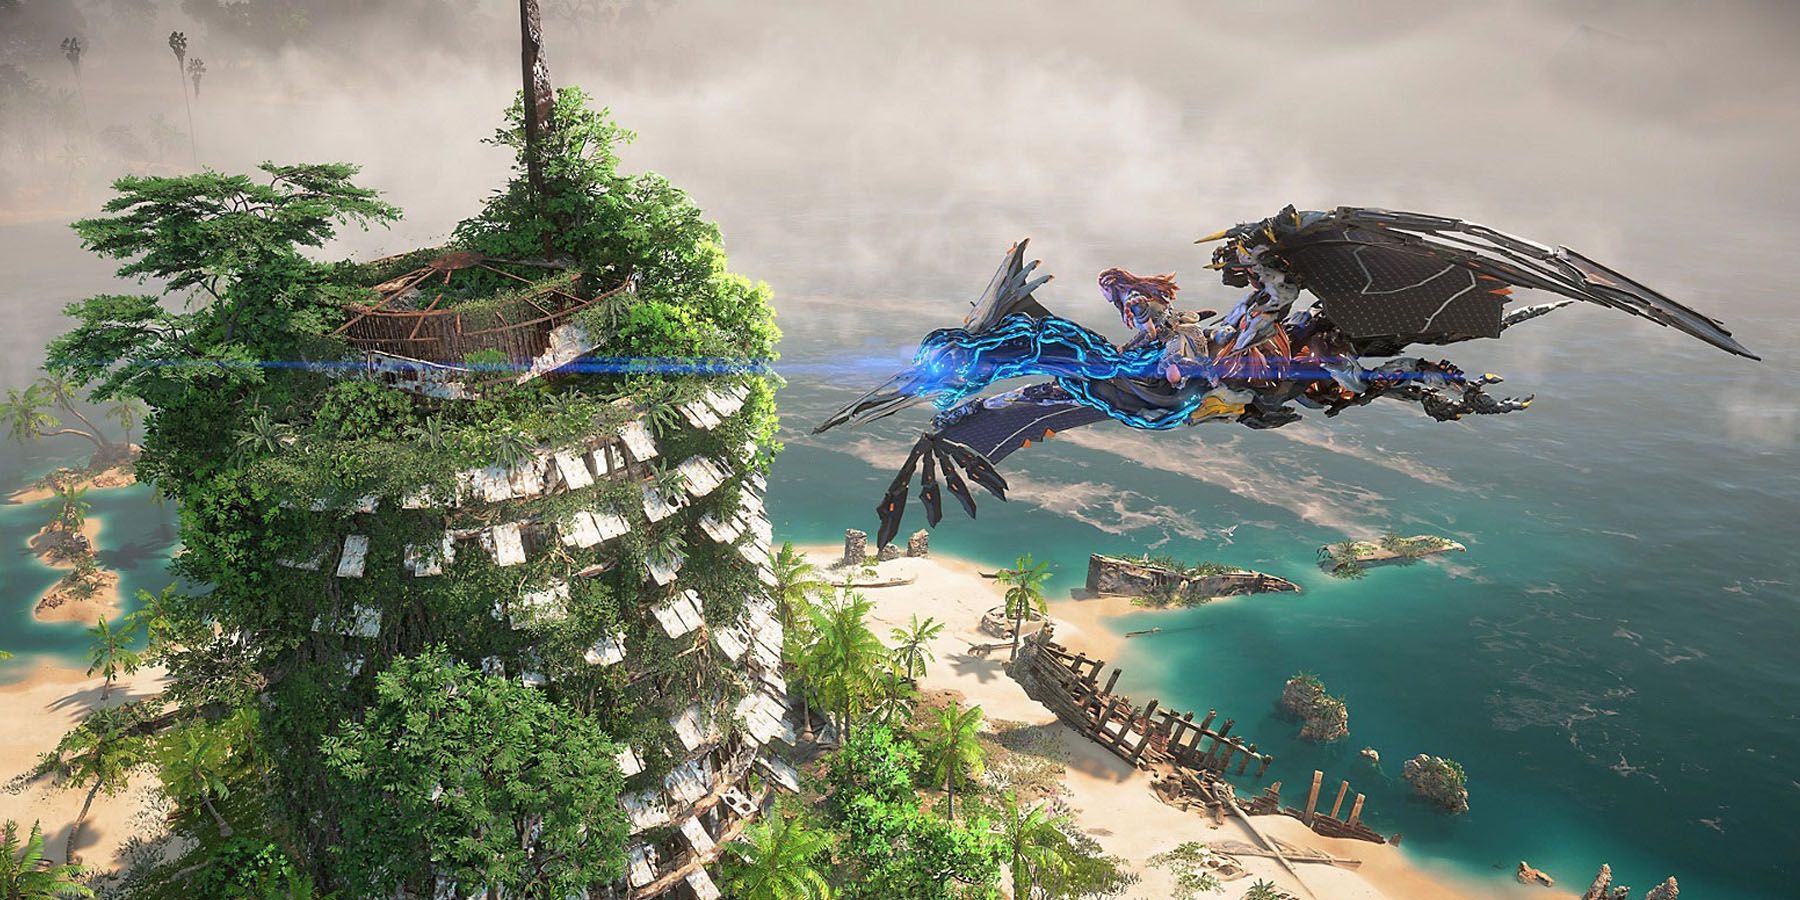 Horizon Forbidden West reveals its Burning Shores DLC map size